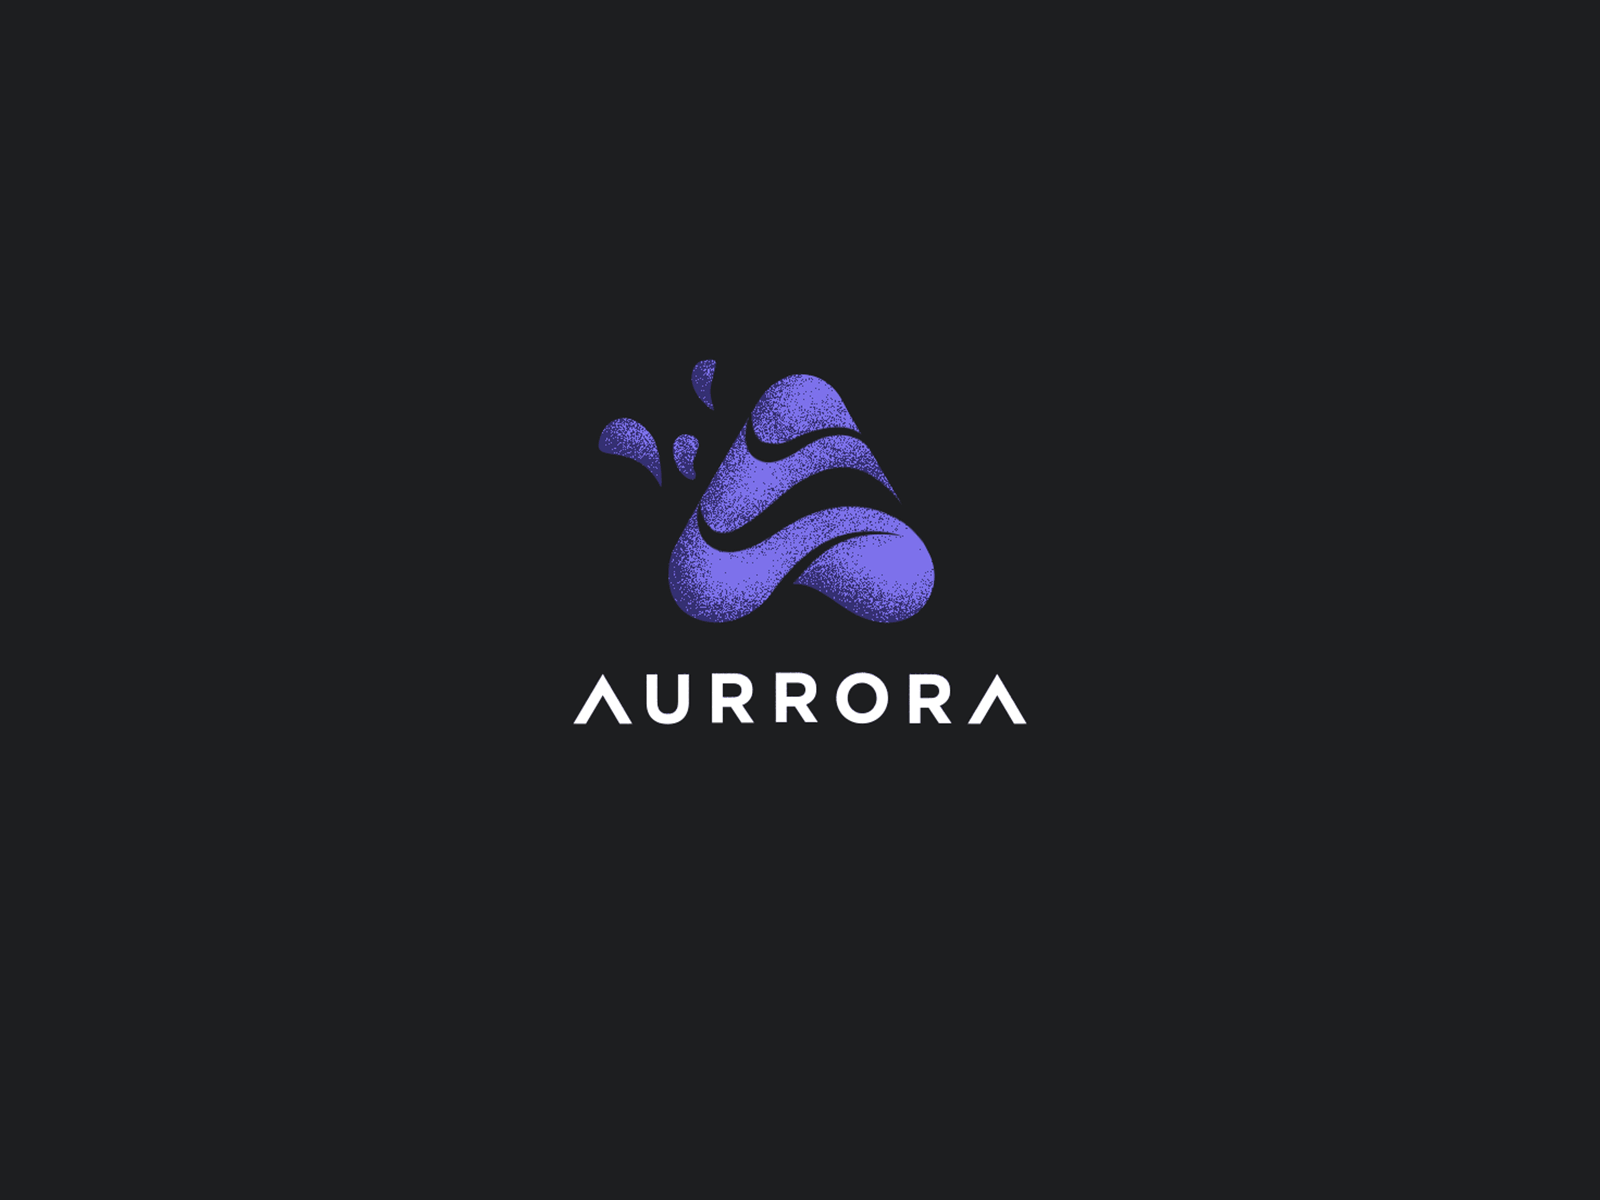 AURRORA